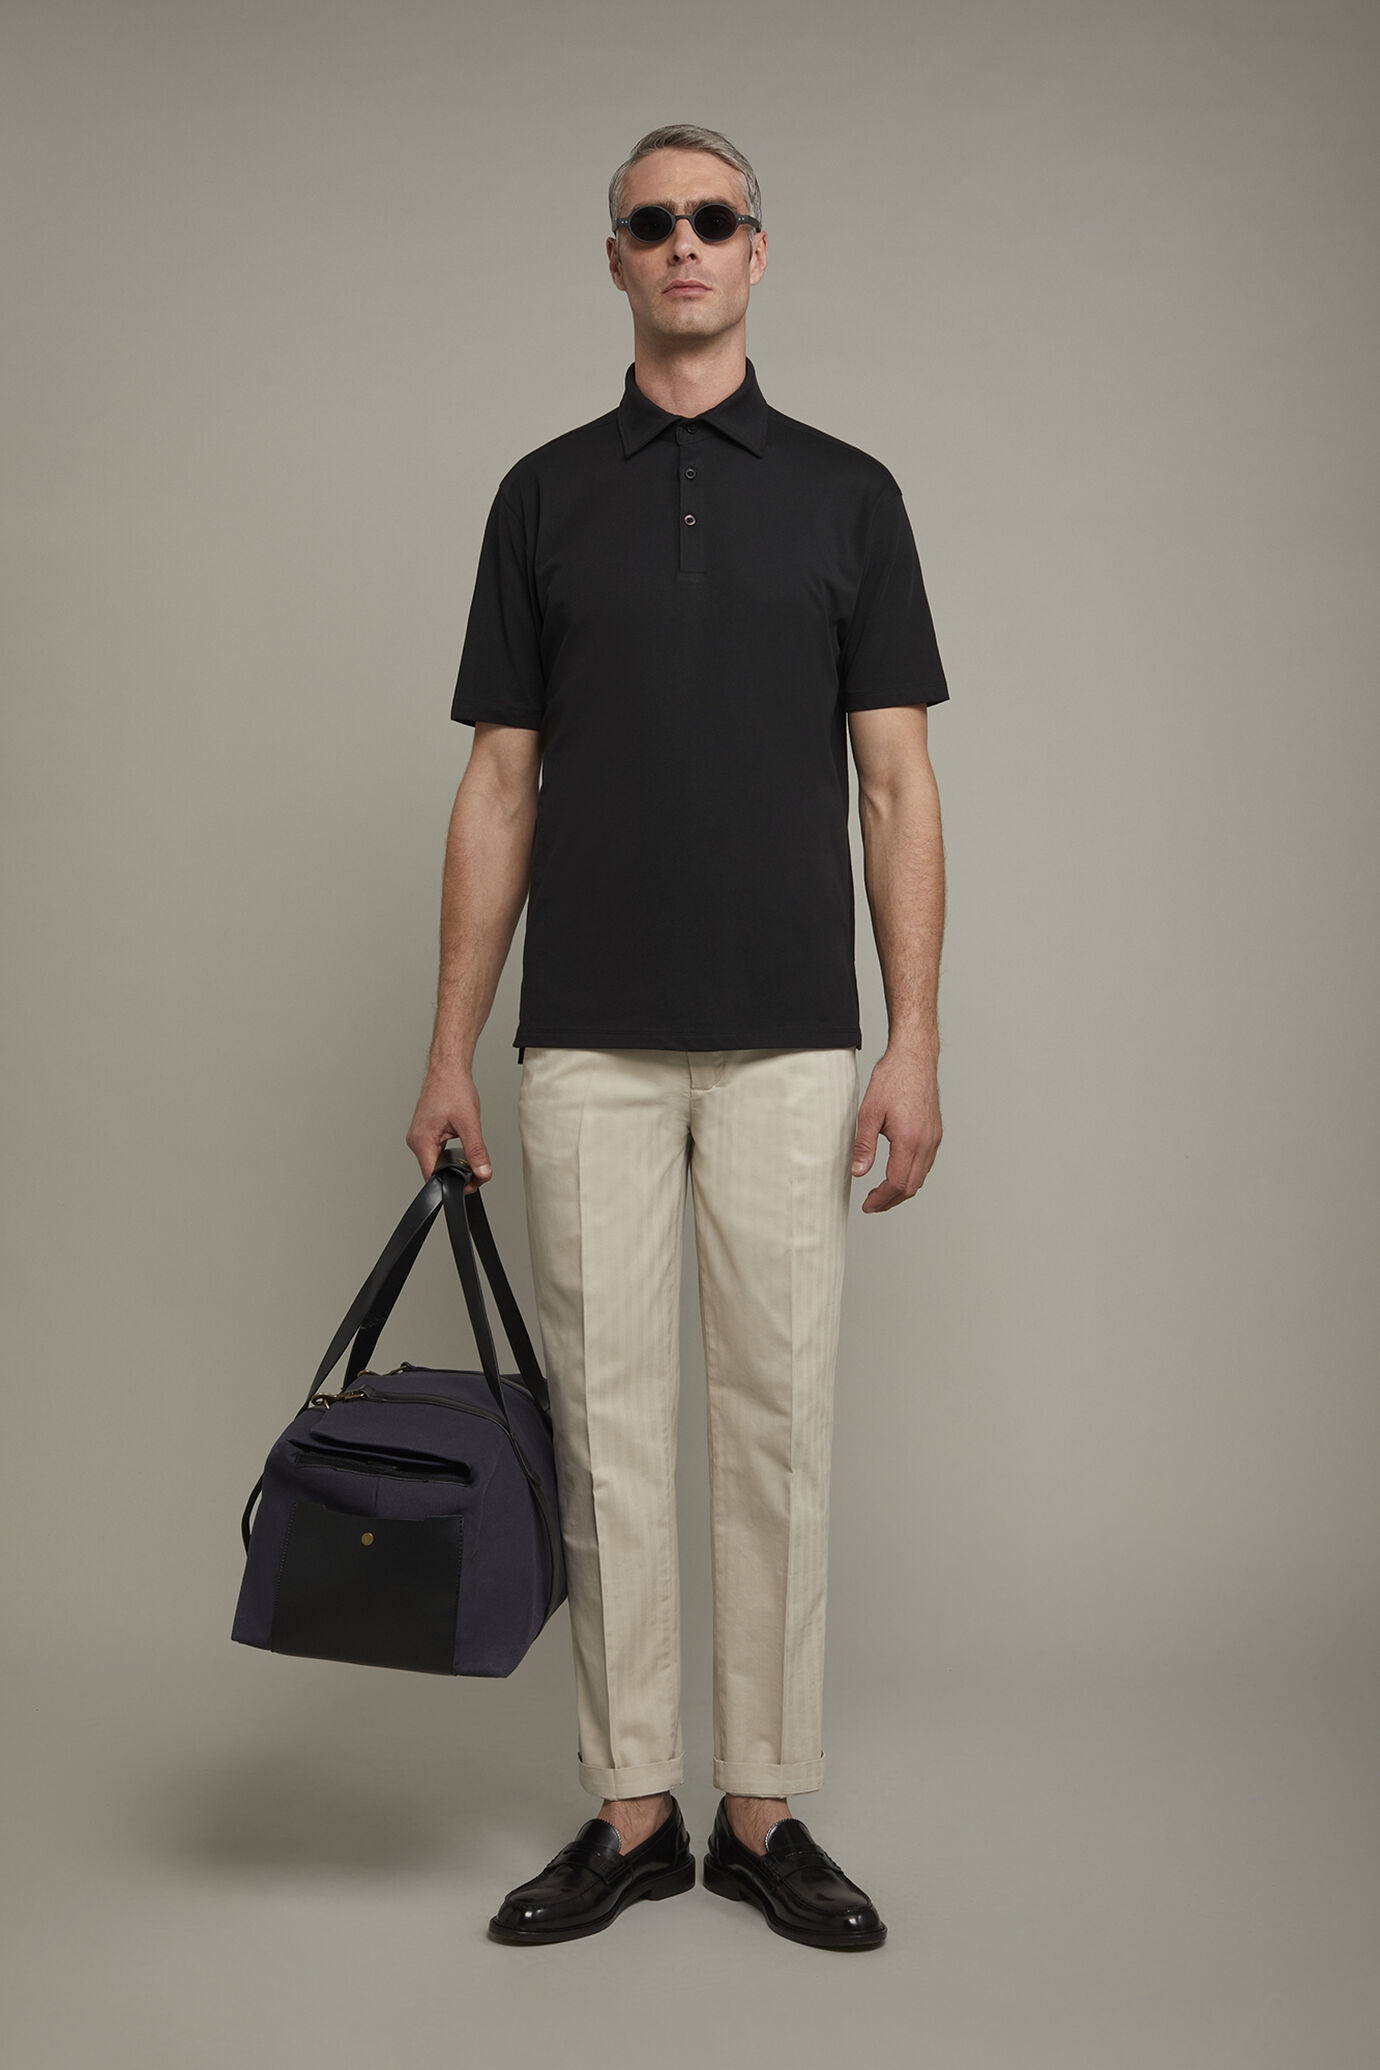 Men’s polo shirt short sleeves 100% supima cotton regular fit